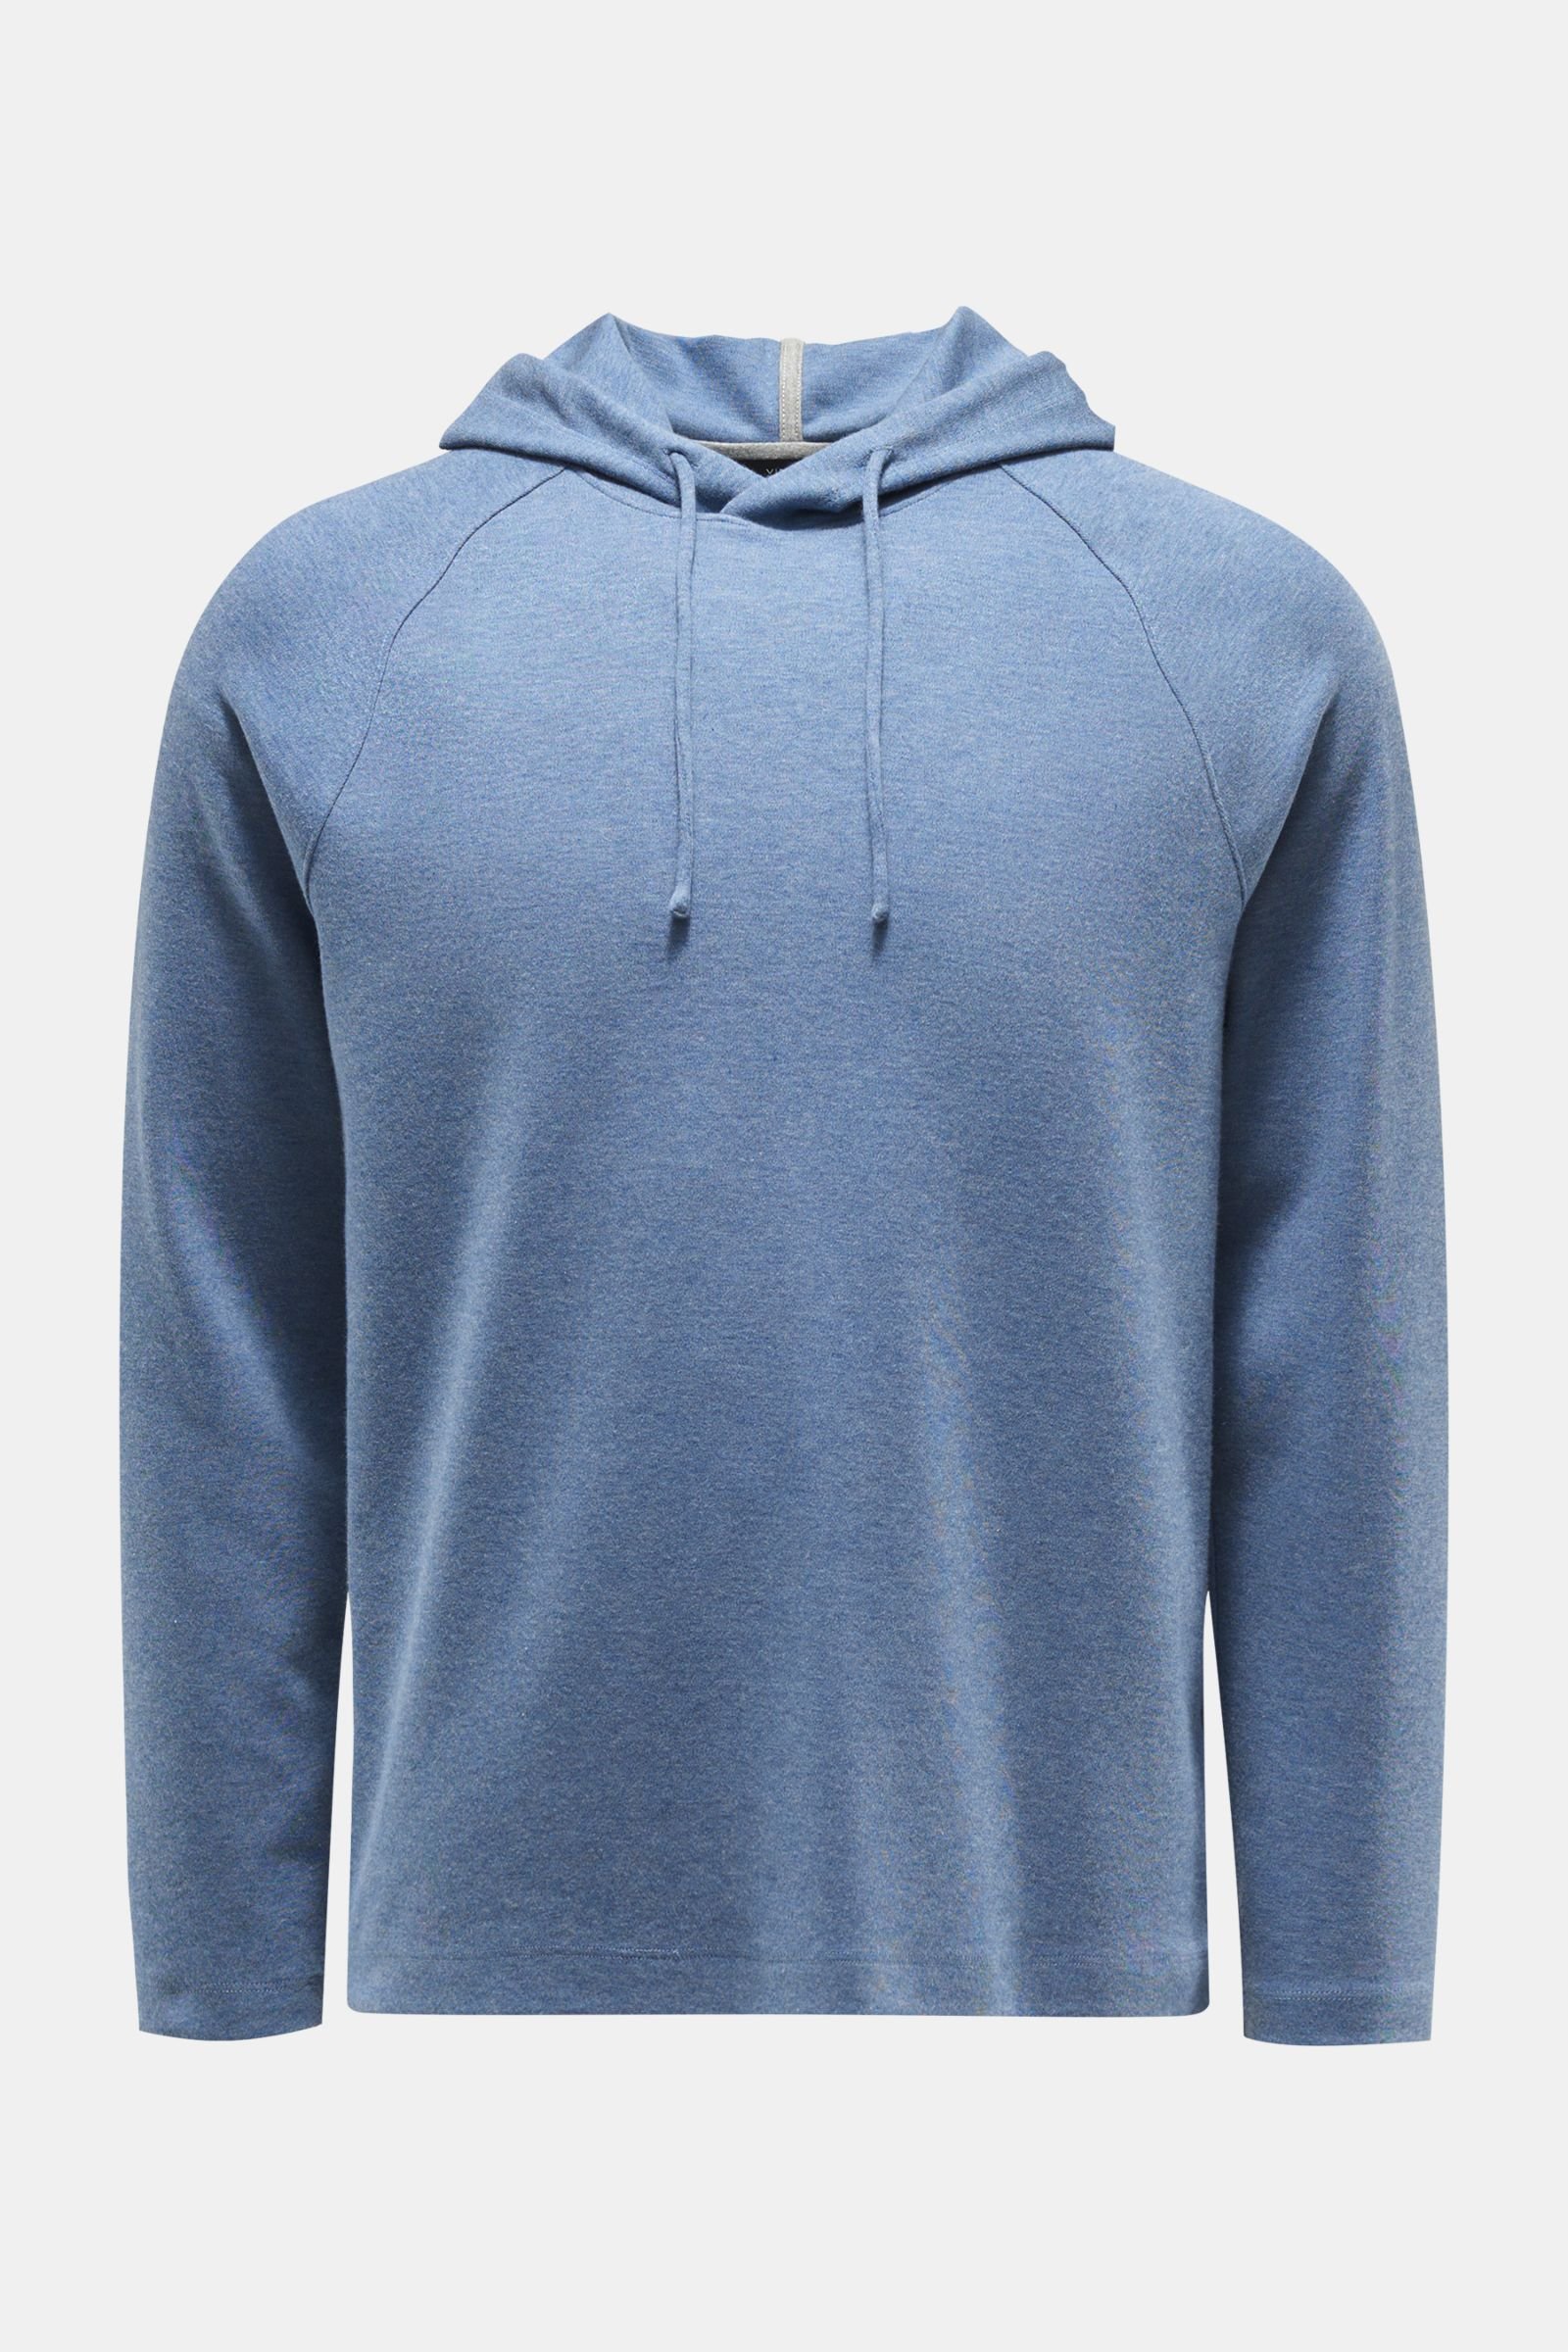 Hooded jumper grey-blue